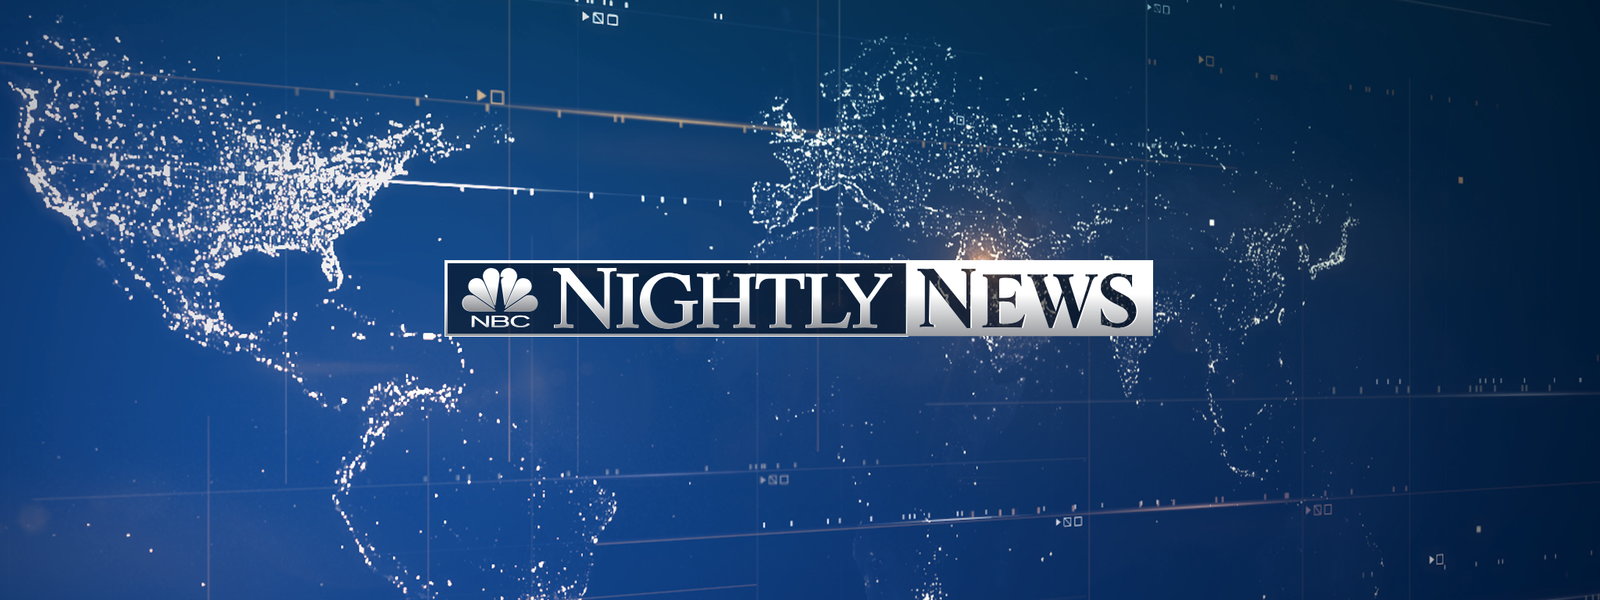 Nbc nightly news